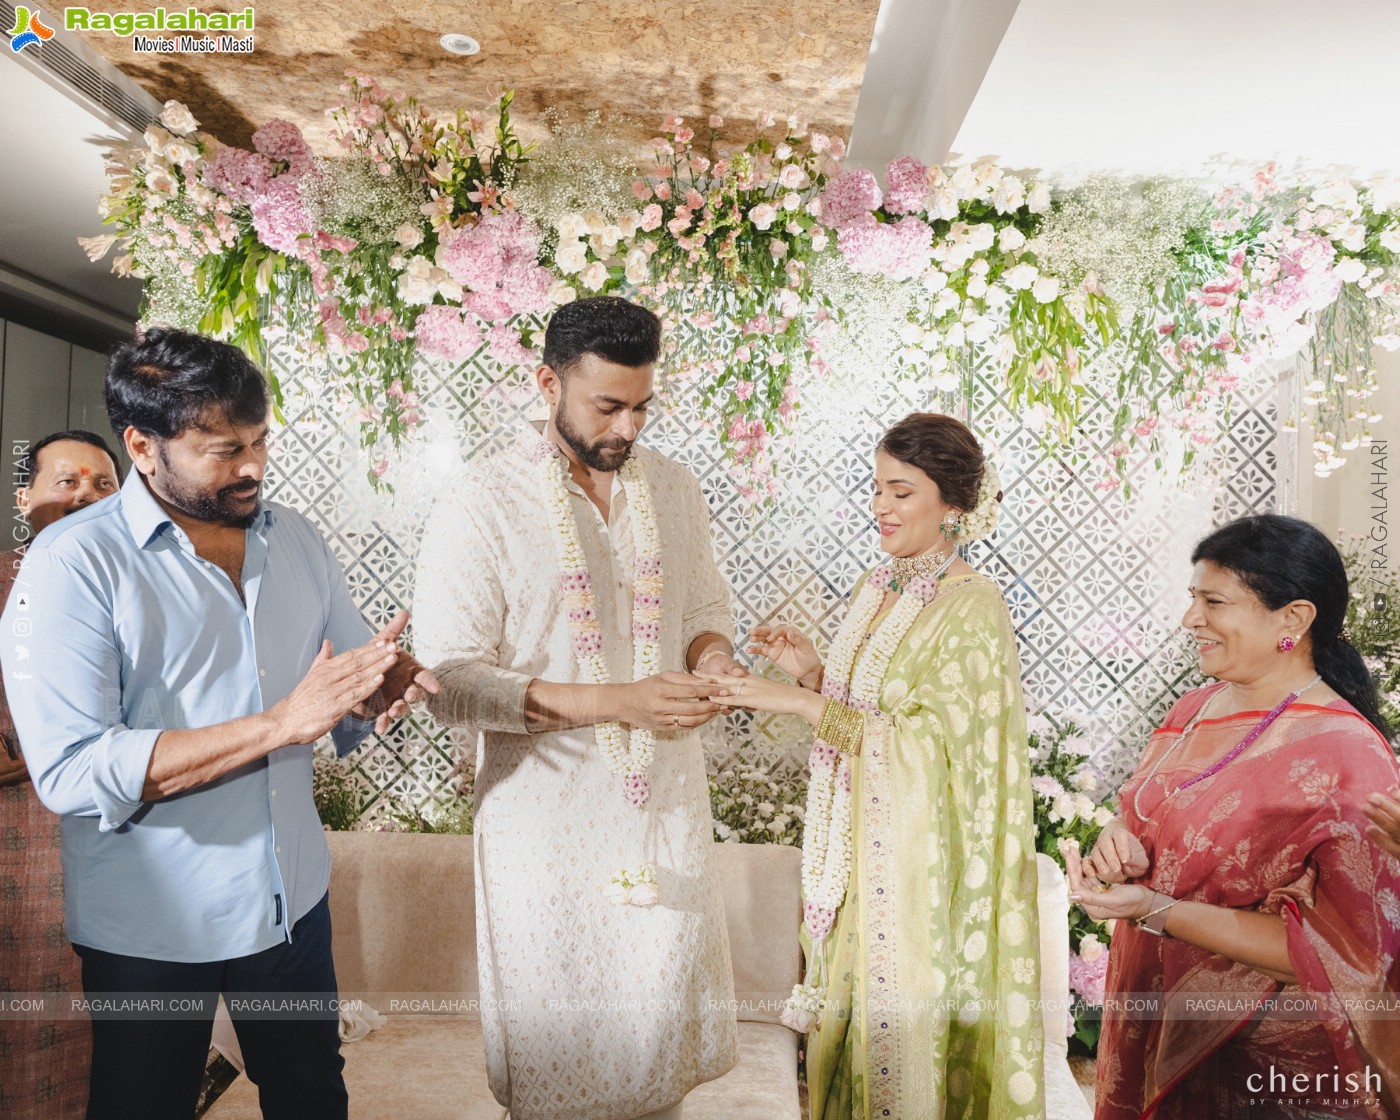 Varun Tej and Lavanya Tripathi's Engagement Pics